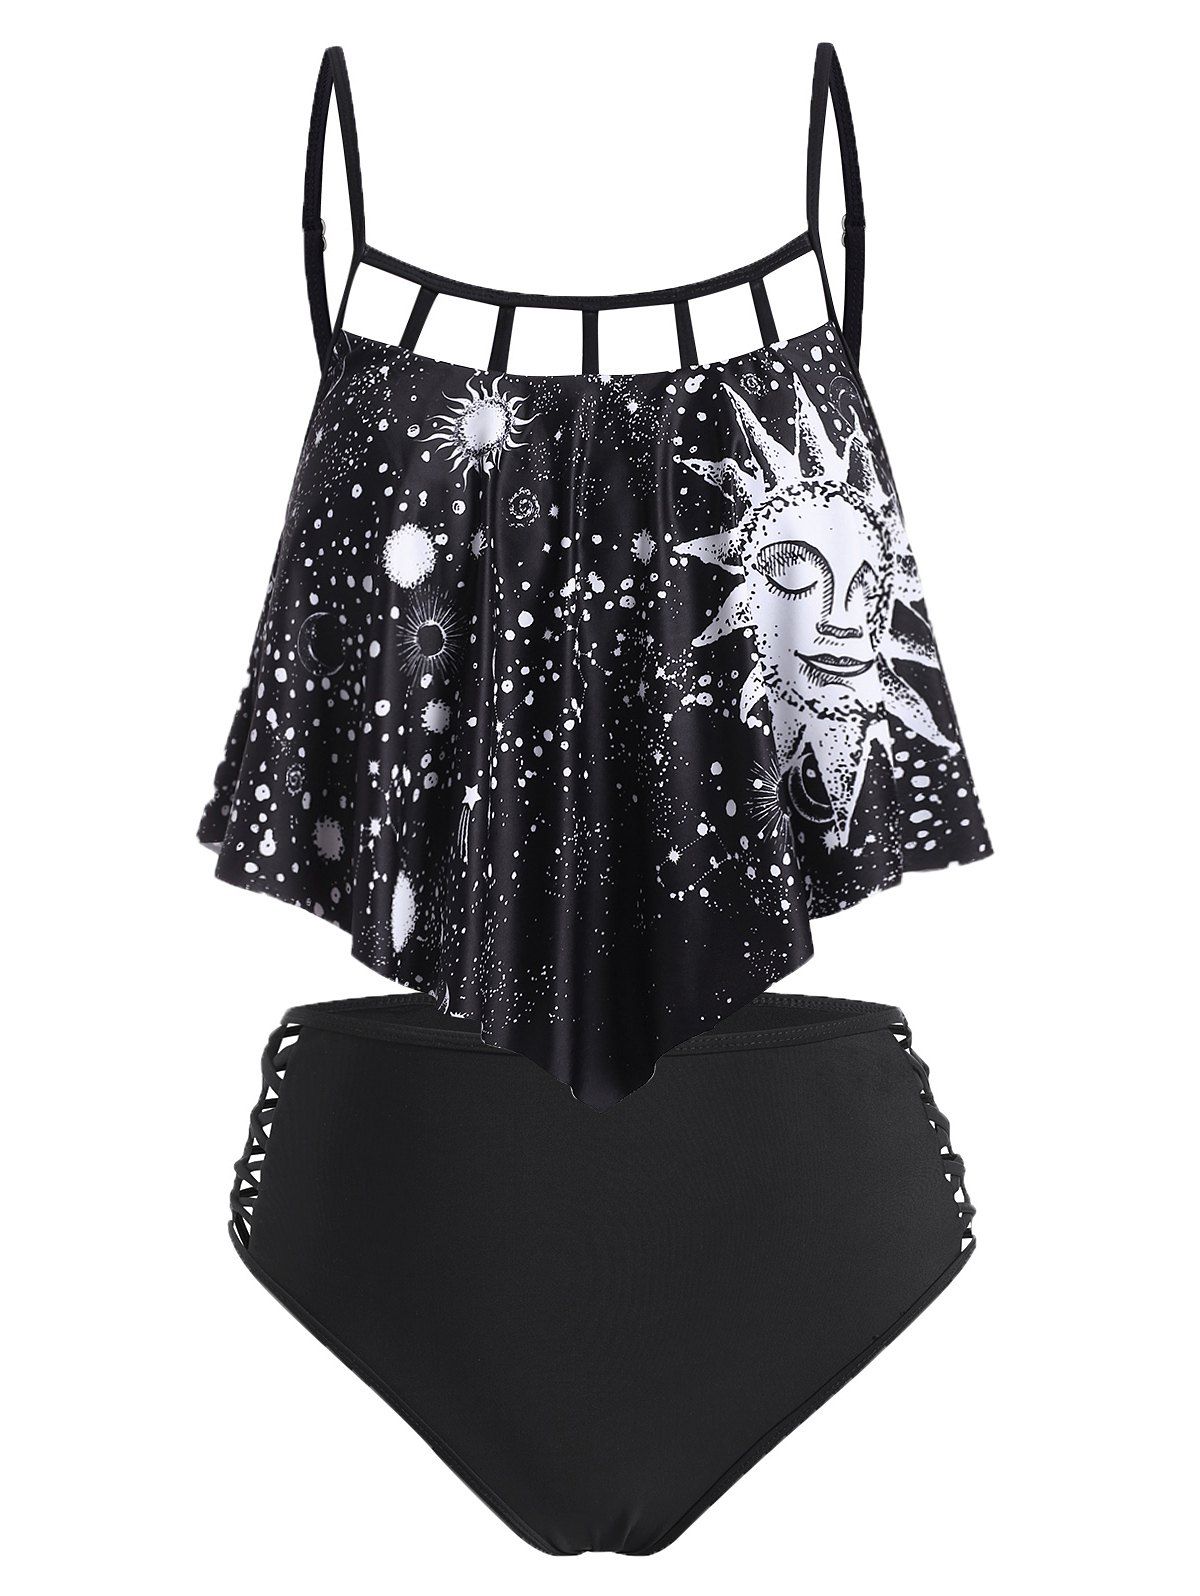 Gothic Tankini Swimwear Astrology Sun Star Moon Print Swimsuit Flounce Lattice Beach Bathing Suit - BLACK 2XL